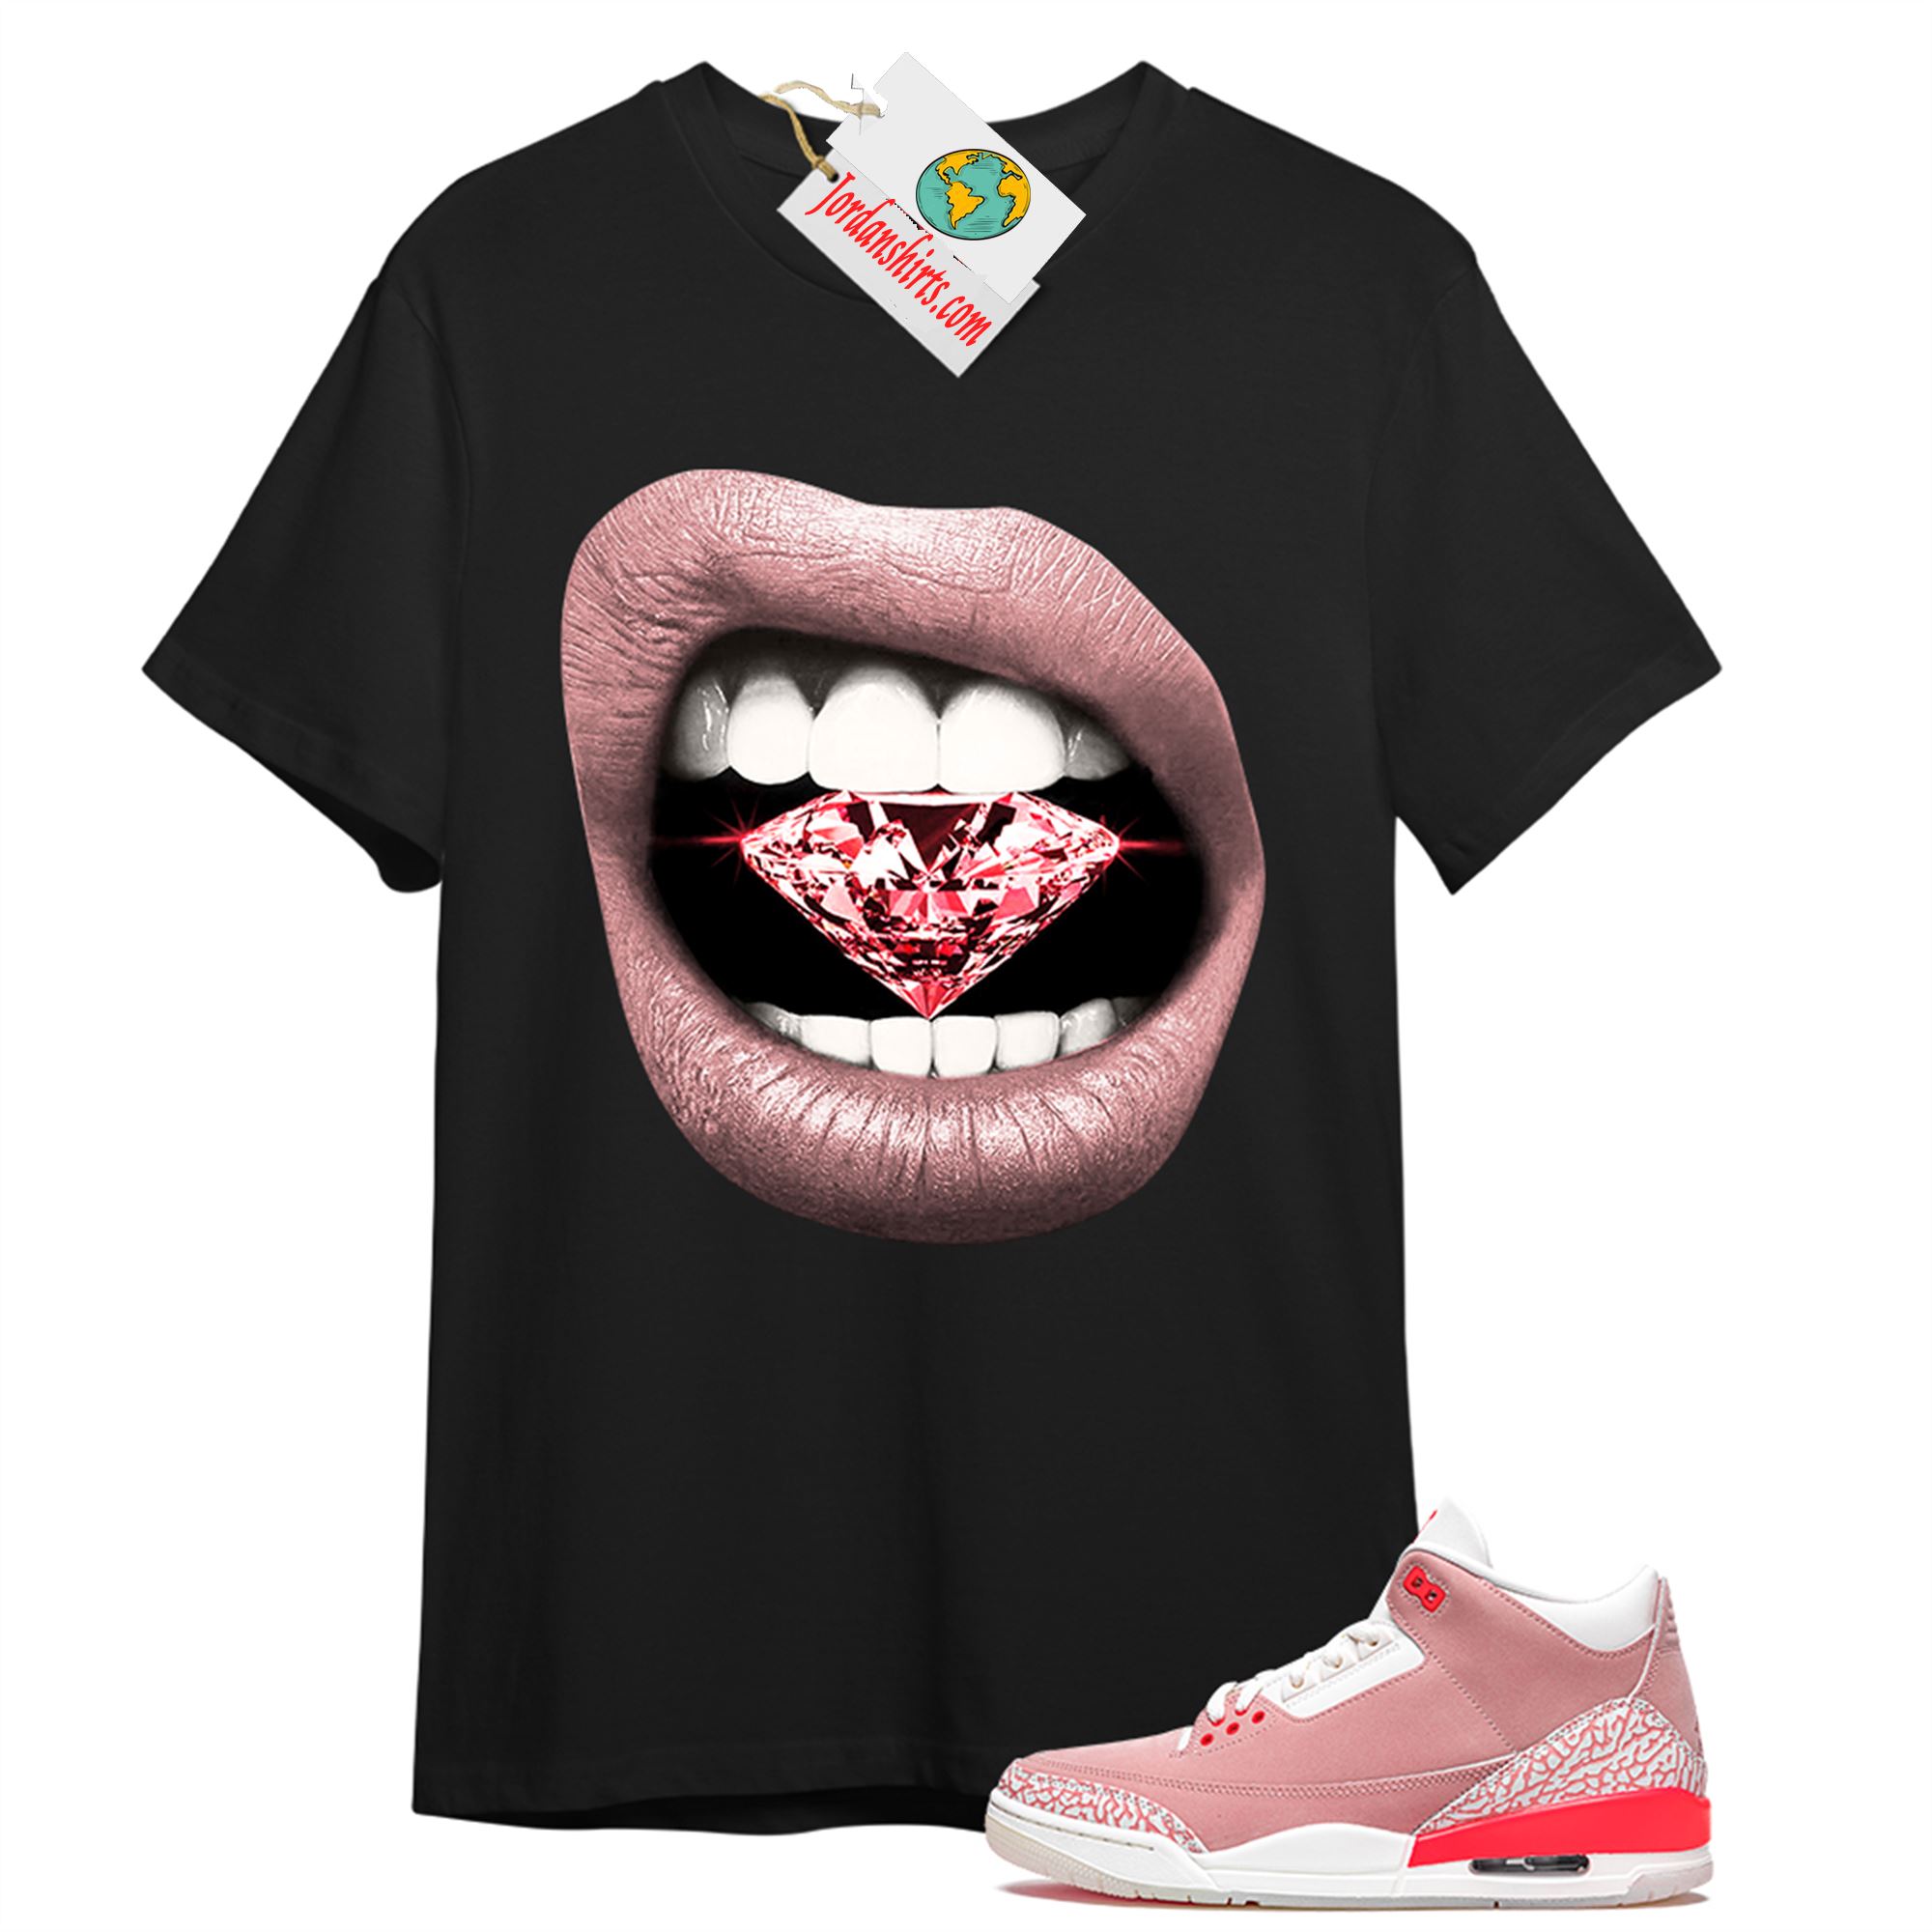 Jordan 3 Shirt, Diamond Lip Black T-shirt Air Jordan 3 Rust Pink 3s Plus Size Up To 5xl